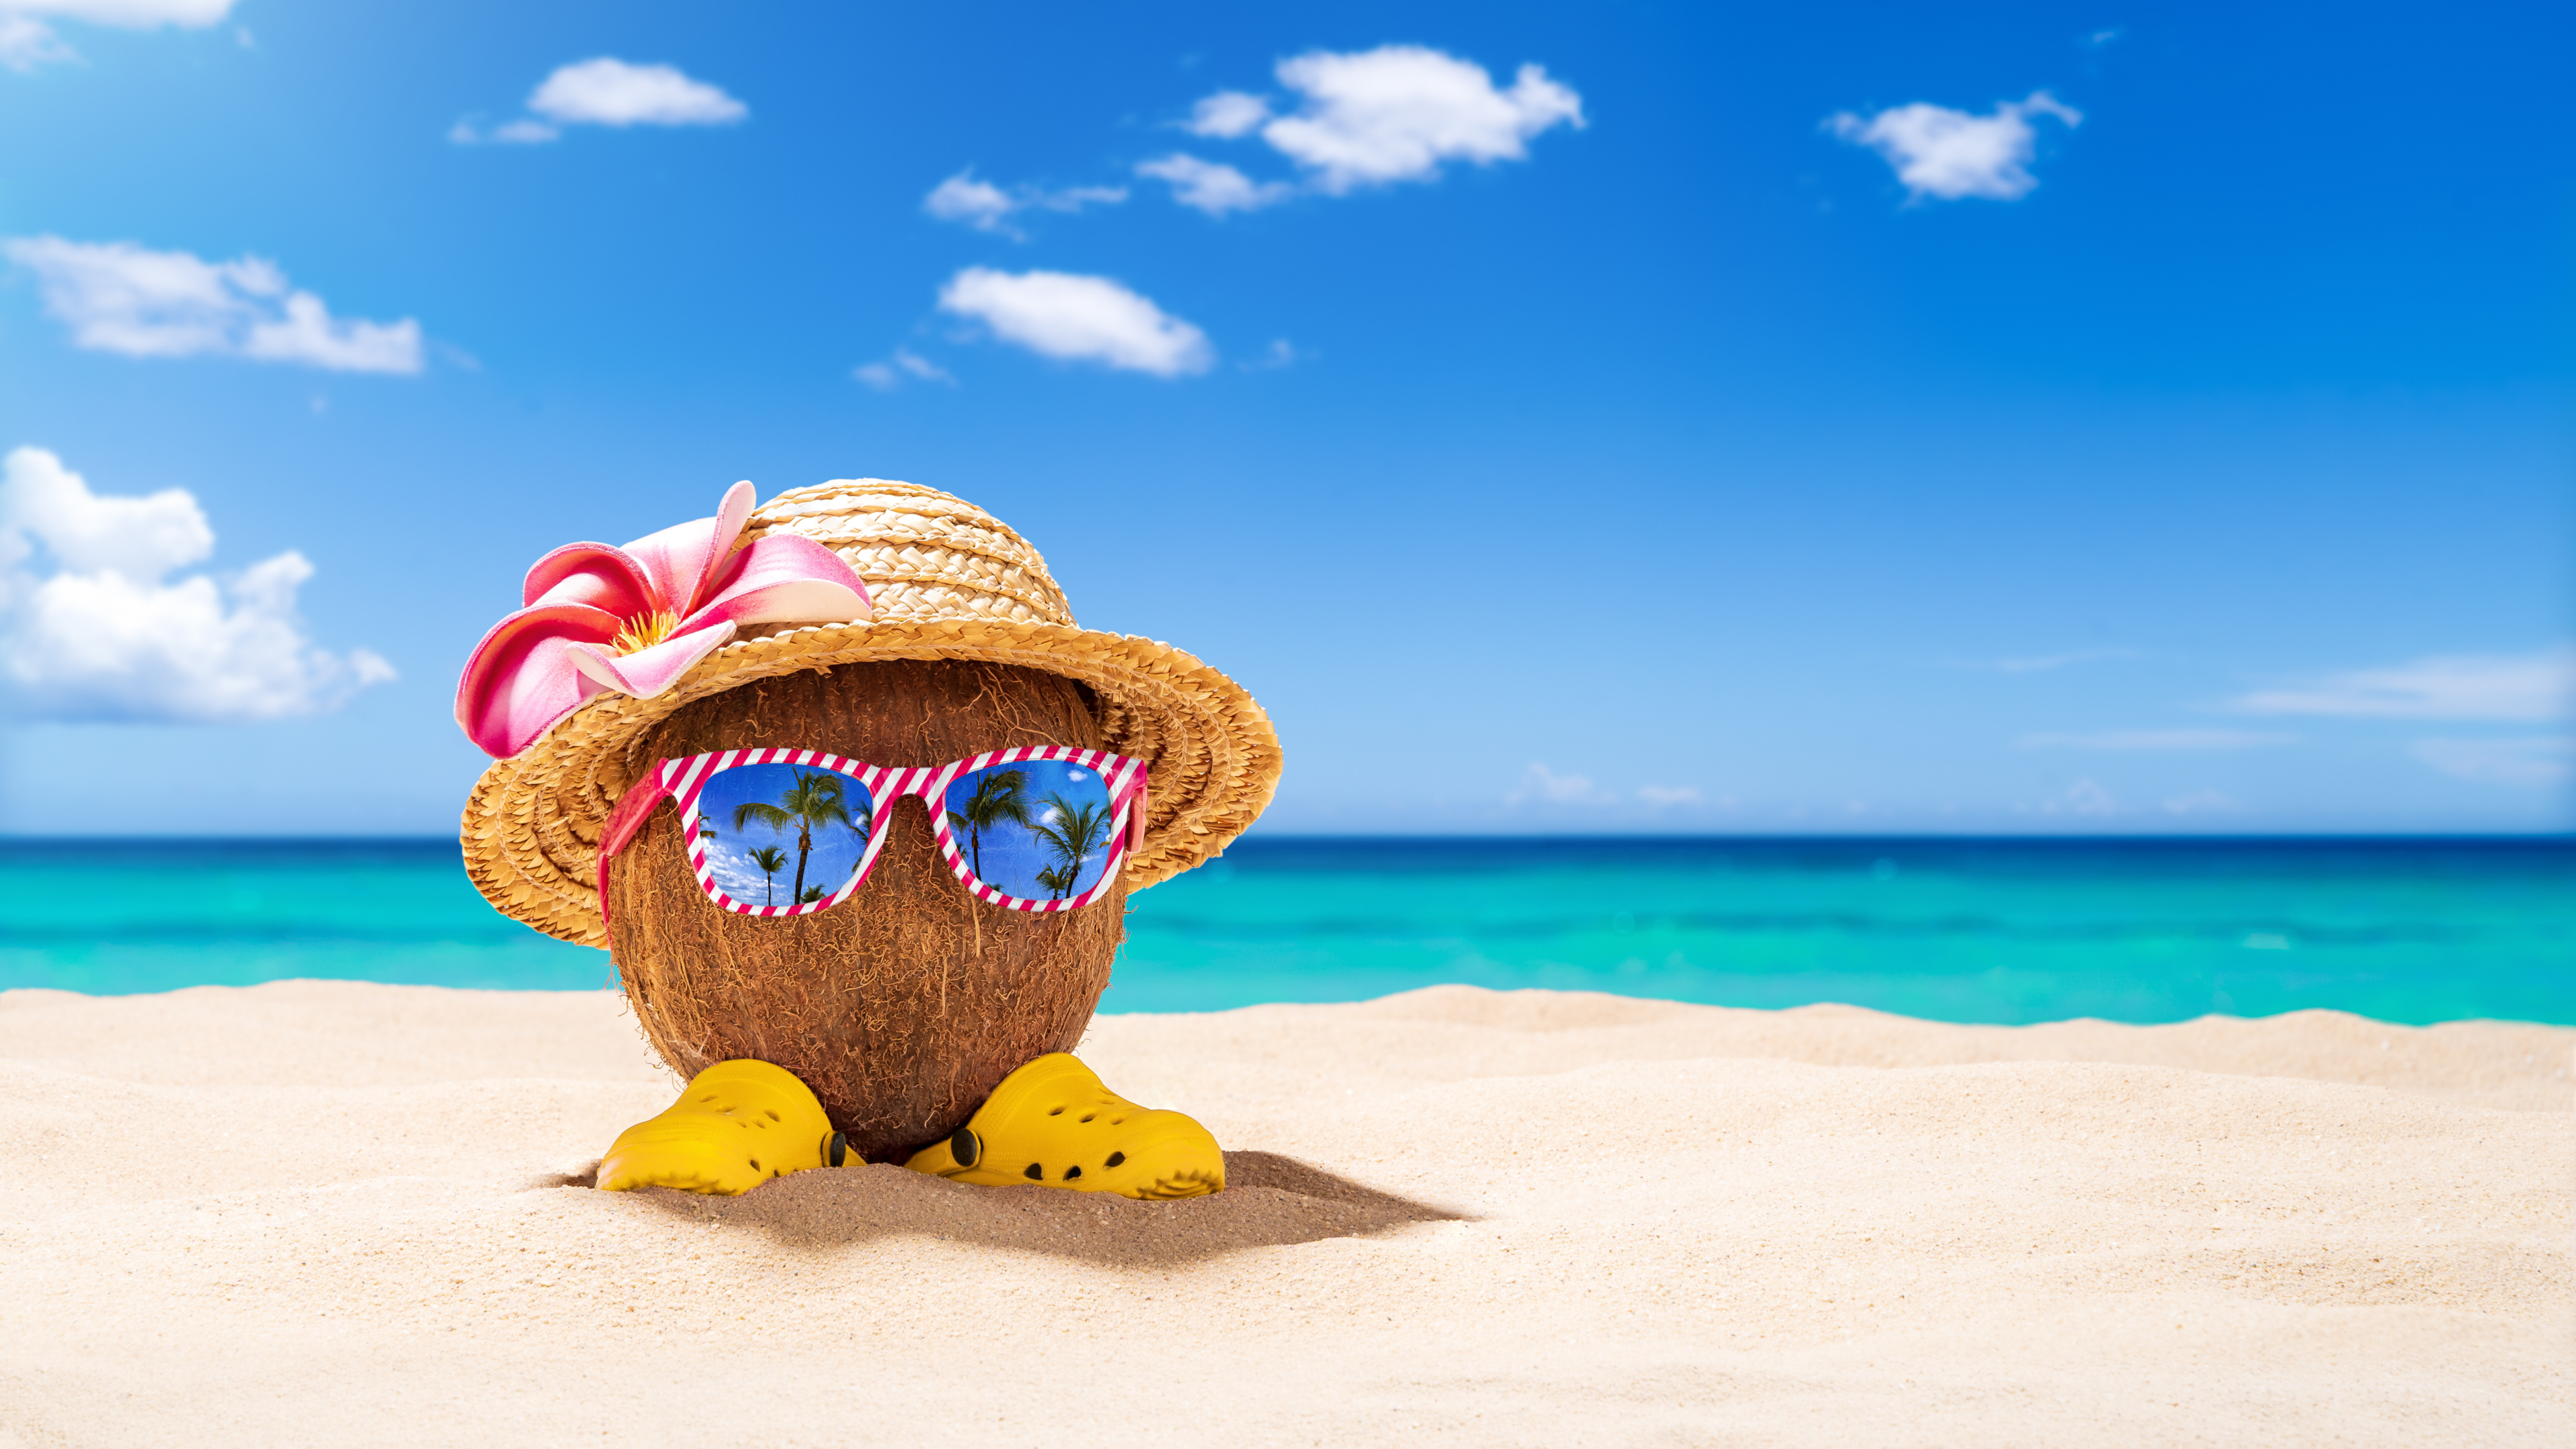 Coconut on the Beach (Shutterstock)